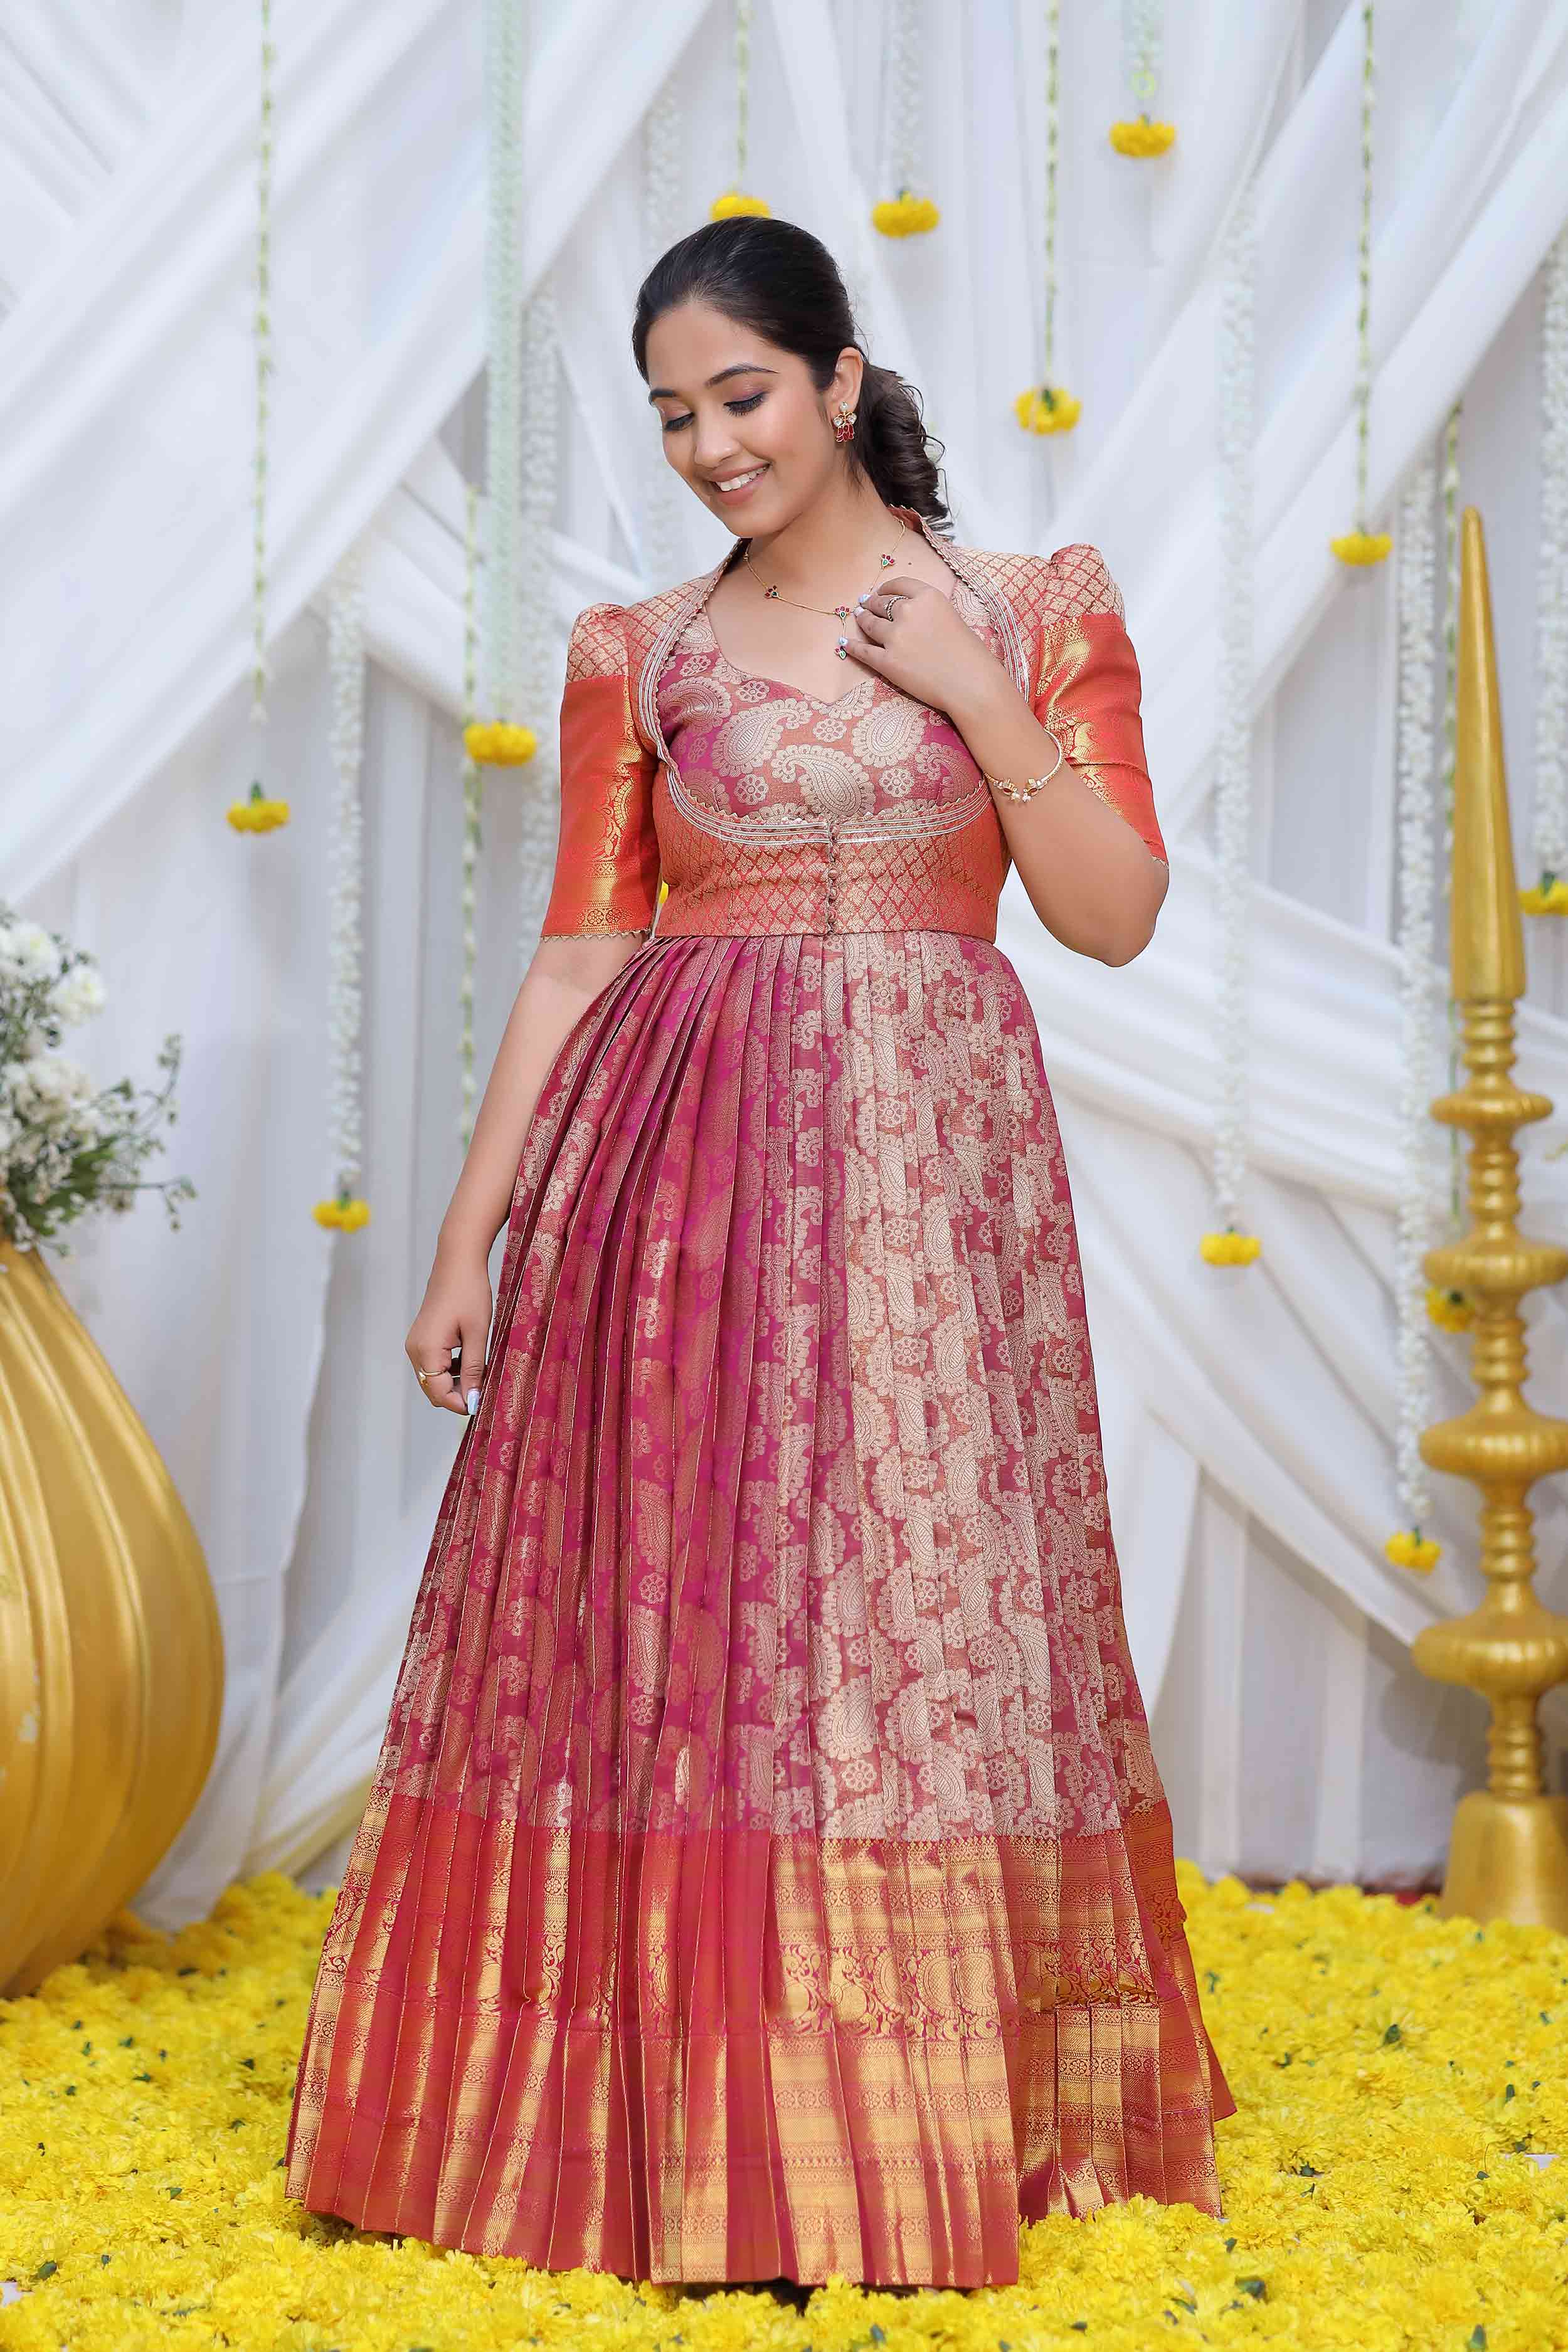 Hot Pink Stunning ethnic dress by Yankita Kapoor - Ethnic Race